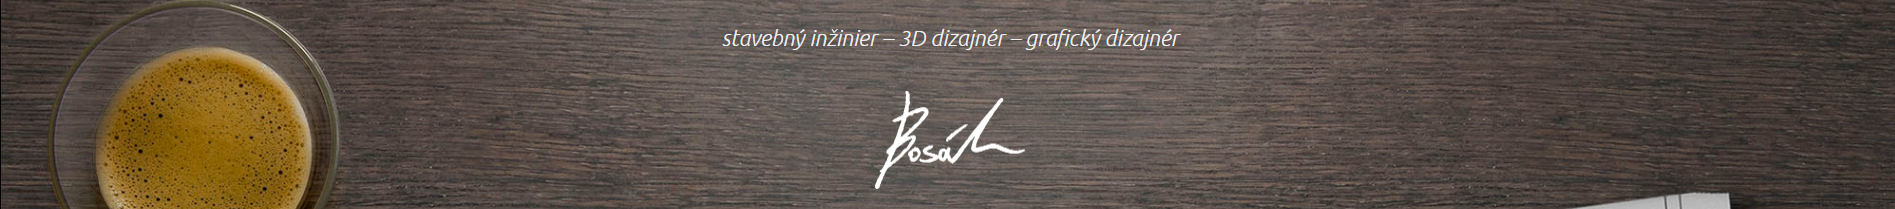 Lukas Bosak's profile banner